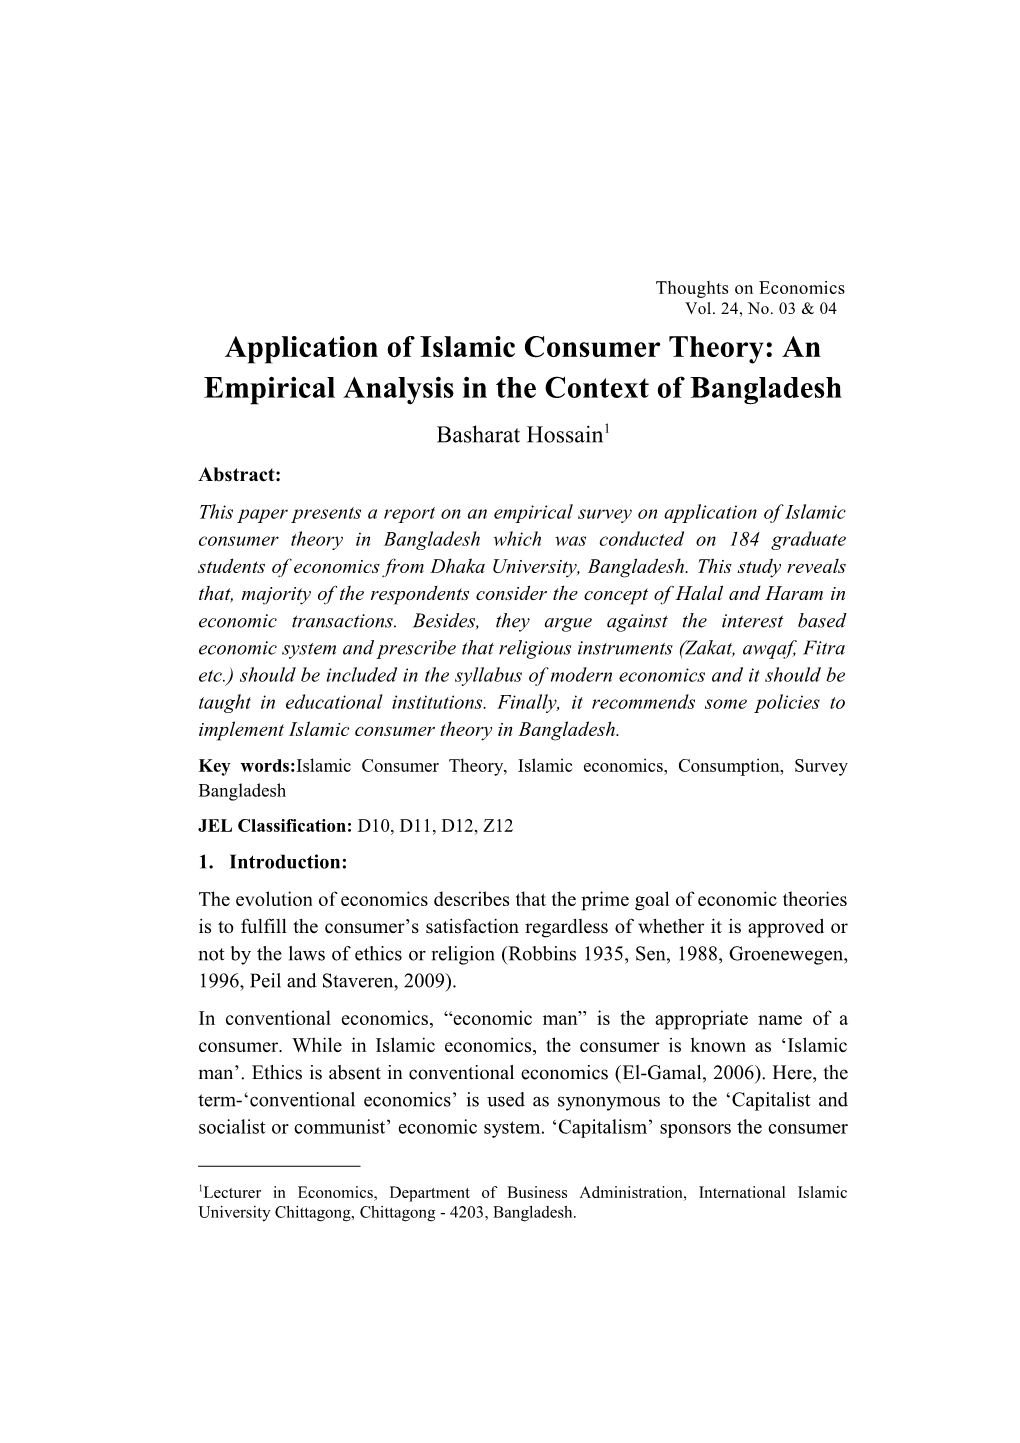 Application of Islamic Consumer Theory: an Empirical Analysis in the Context of Bangladesh